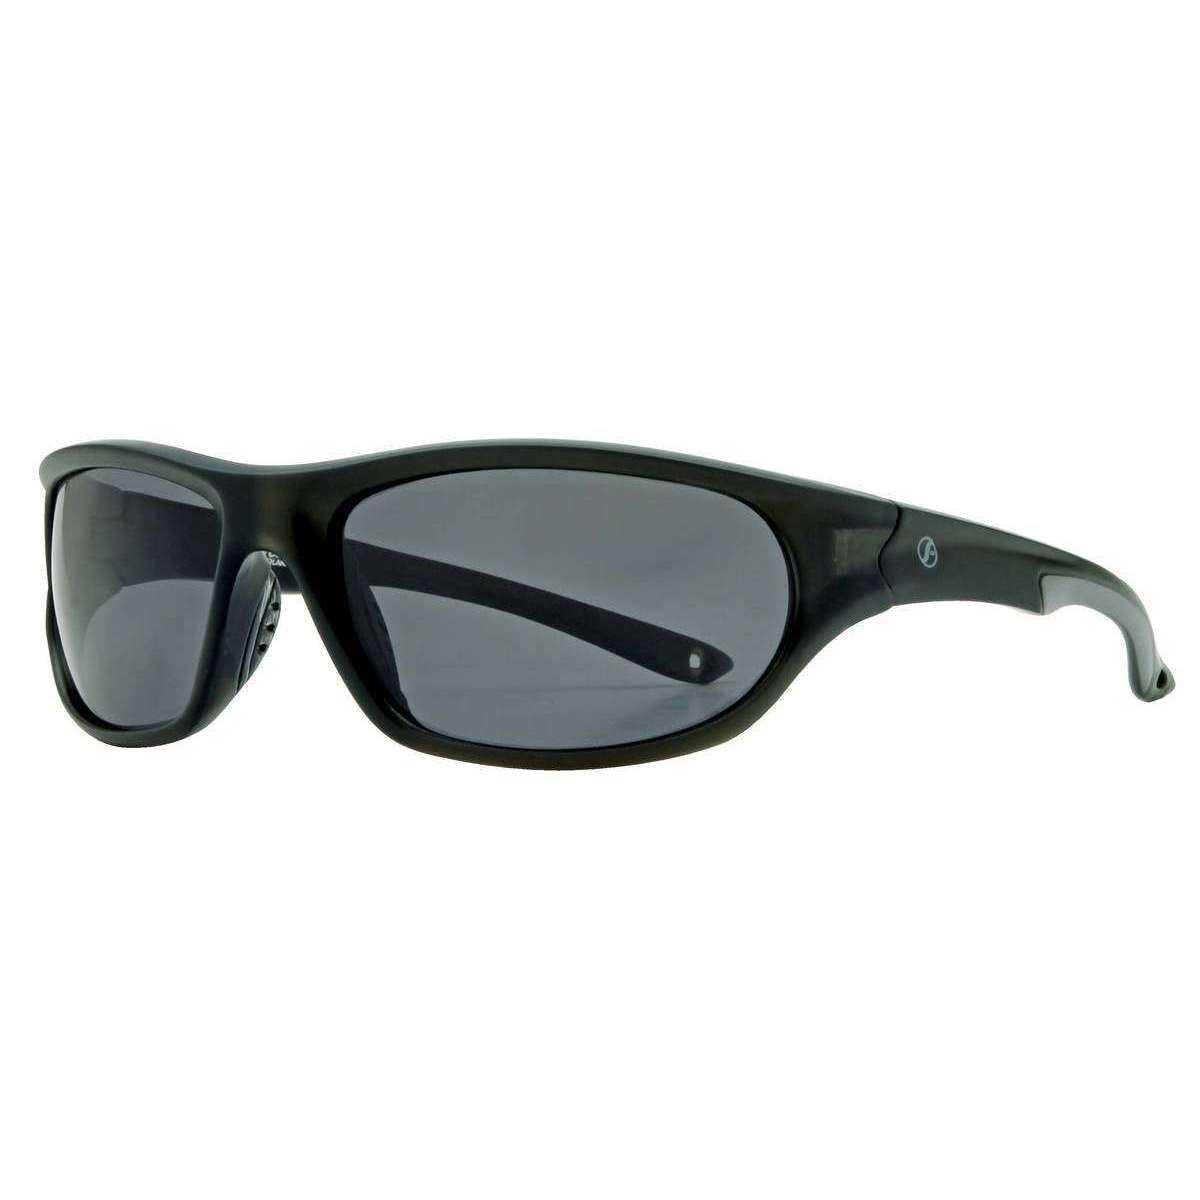 Freedom Sport Wrap Sunglasses - Frosted Dark Teal/Smoke Grey